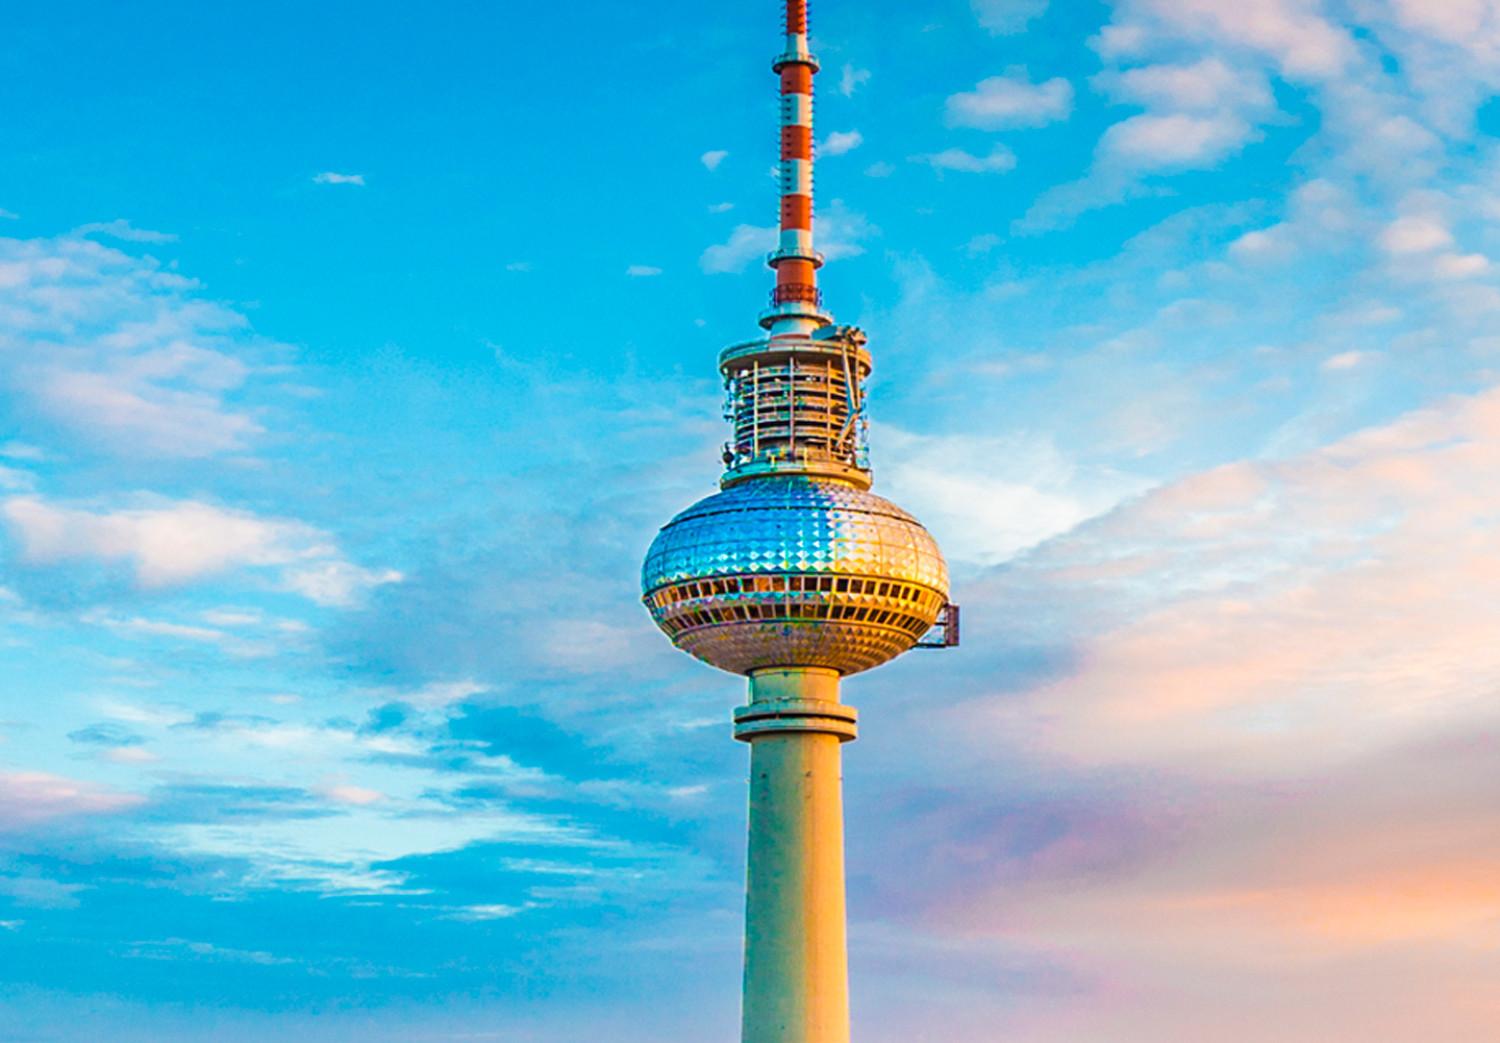 Cuadro decorativo Berliner Fernsehturm Alemania - panorama arquitectónico de Berlín